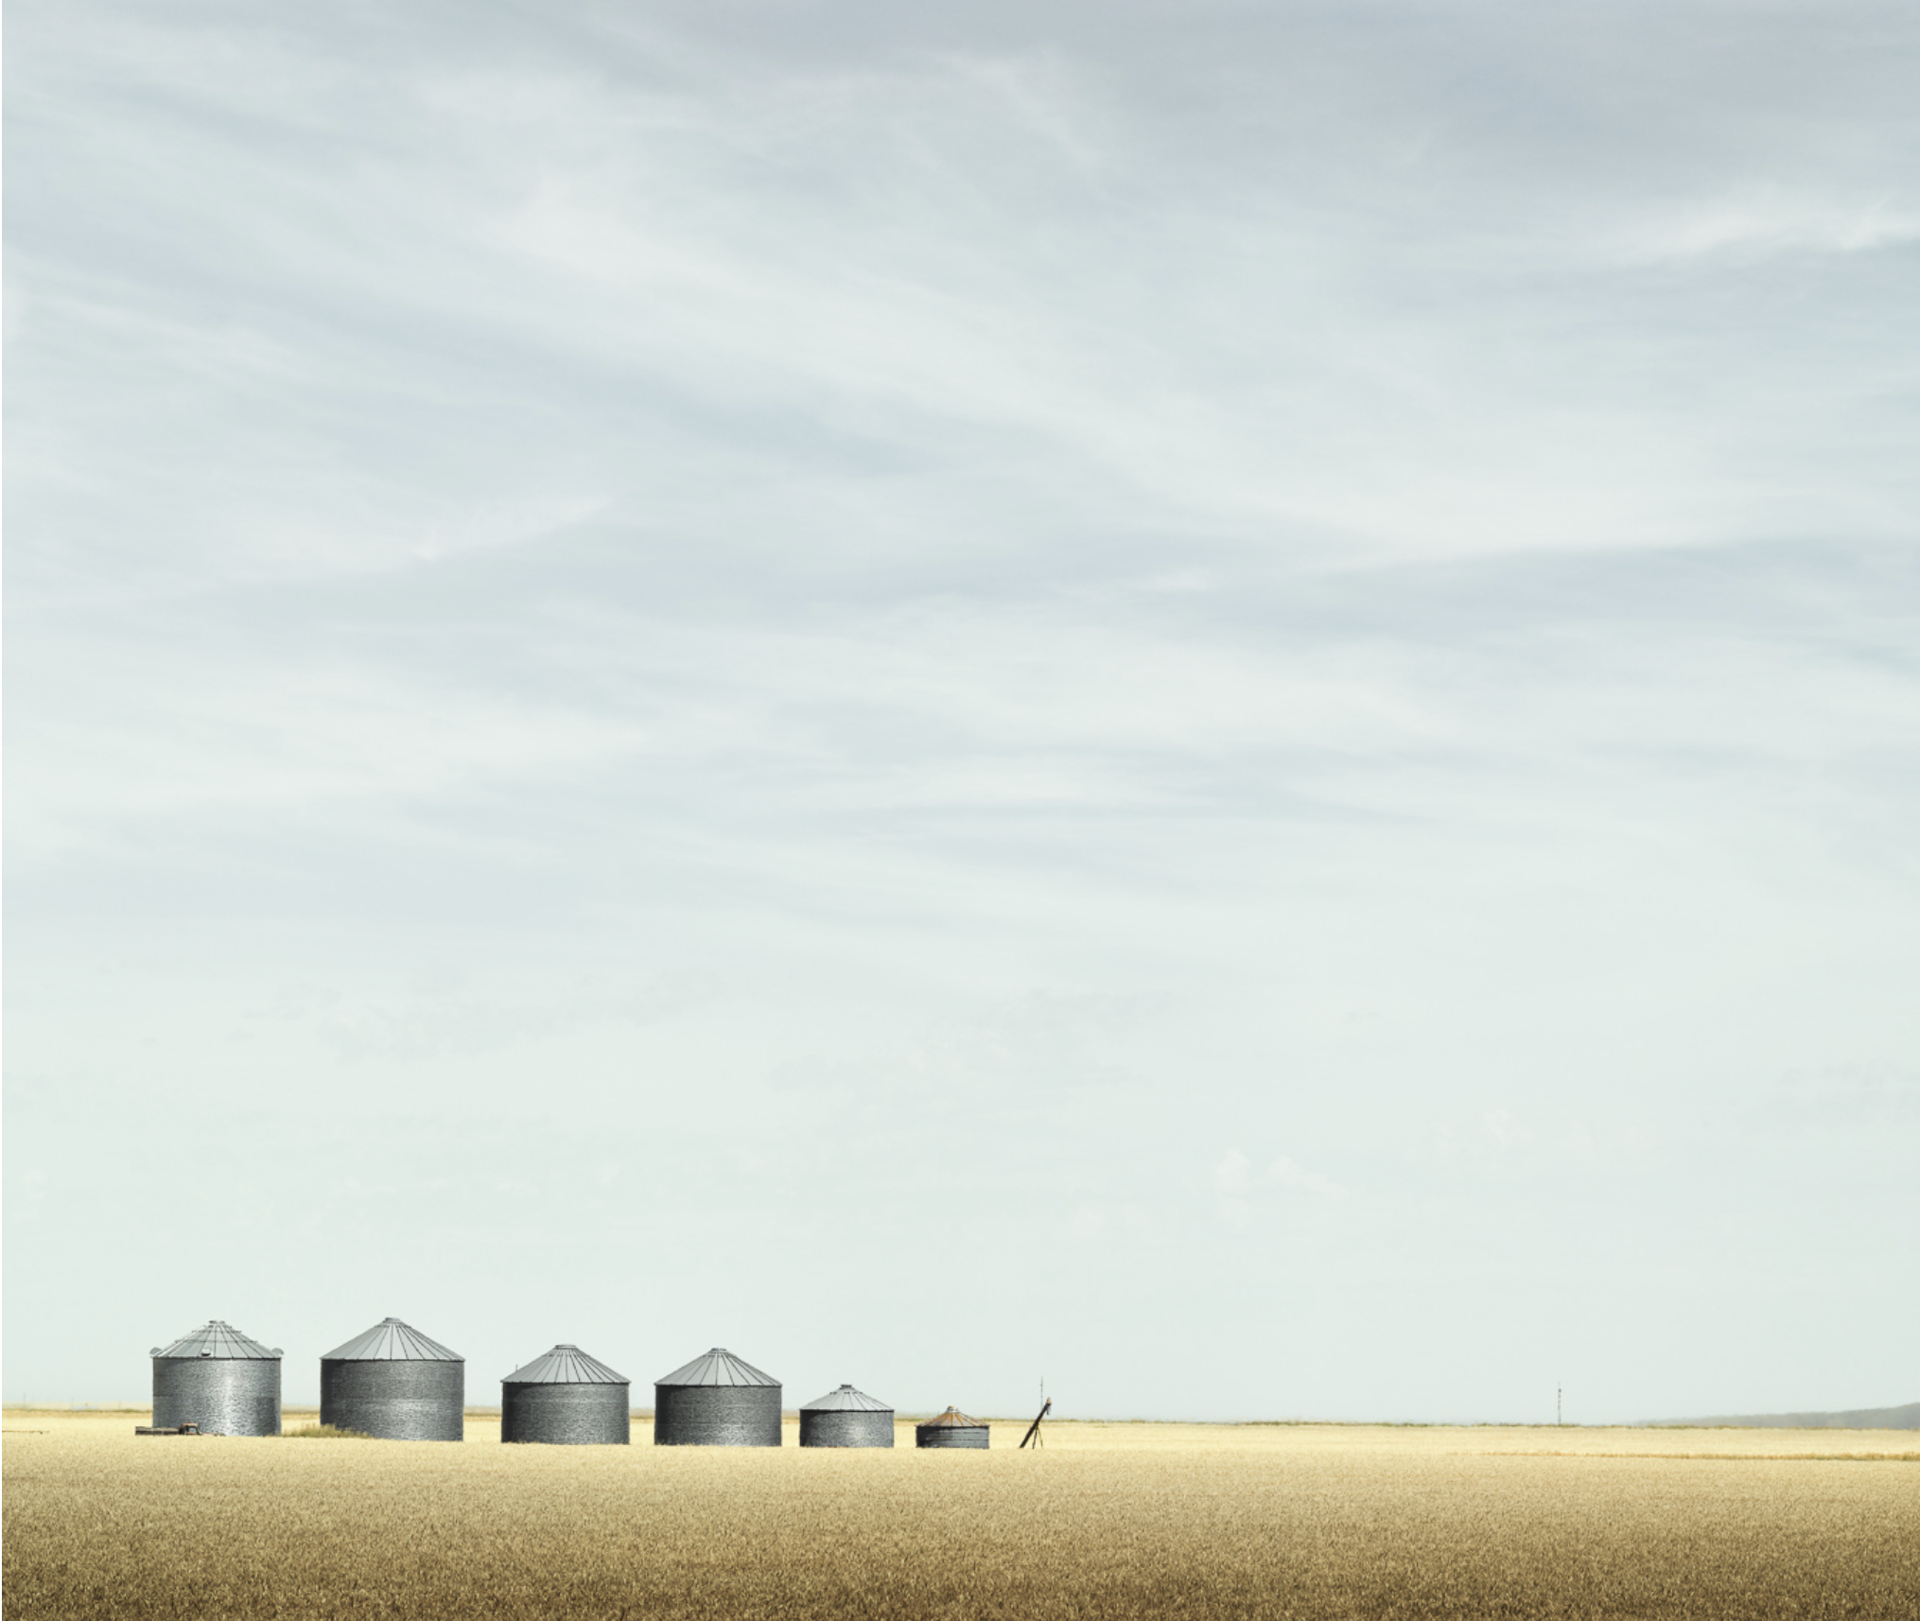 Grain Bins 1 by Jim Westphalen